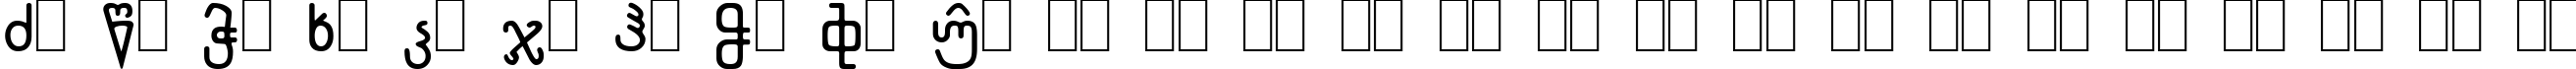 Пример написания английского алфавита шрифтом WP CyrillicB